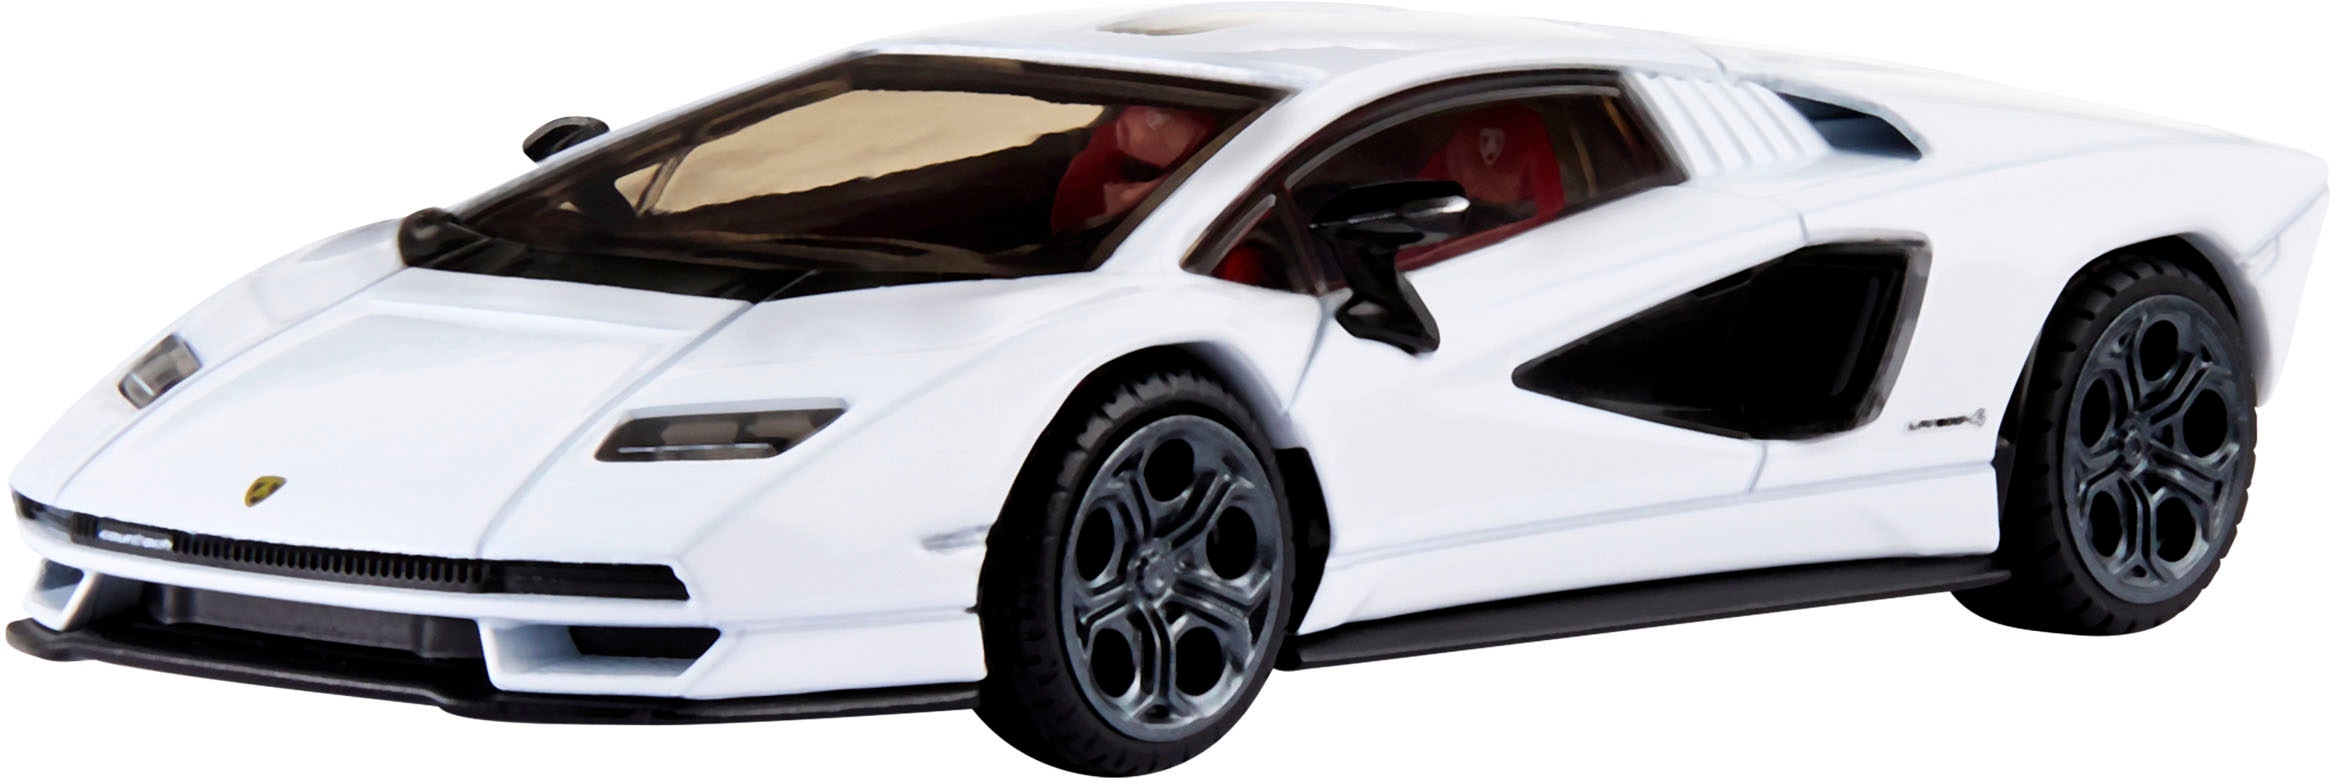 Hot Wheels 1:43« Spielzeug-Auto Lamborghini »Premium bei